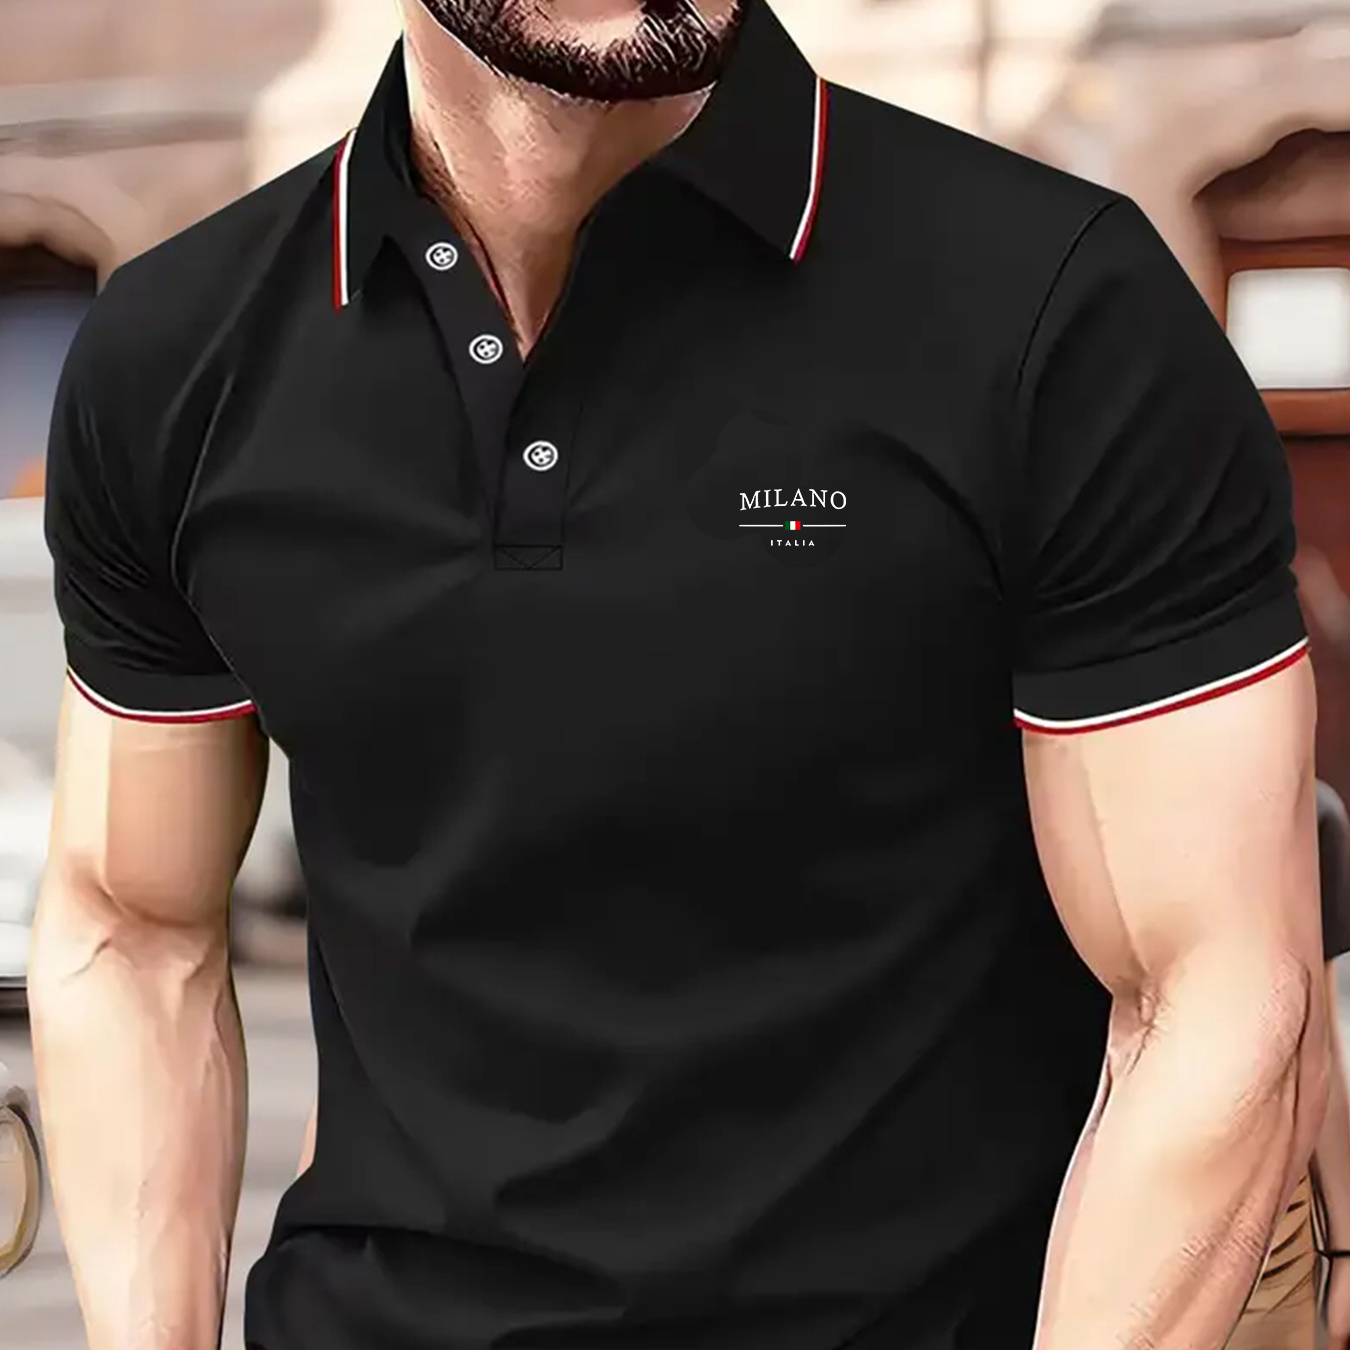 

Milano Print Men's Short Sleeve Golf Shirt, Business Casual Comfy Top For Tennis Training